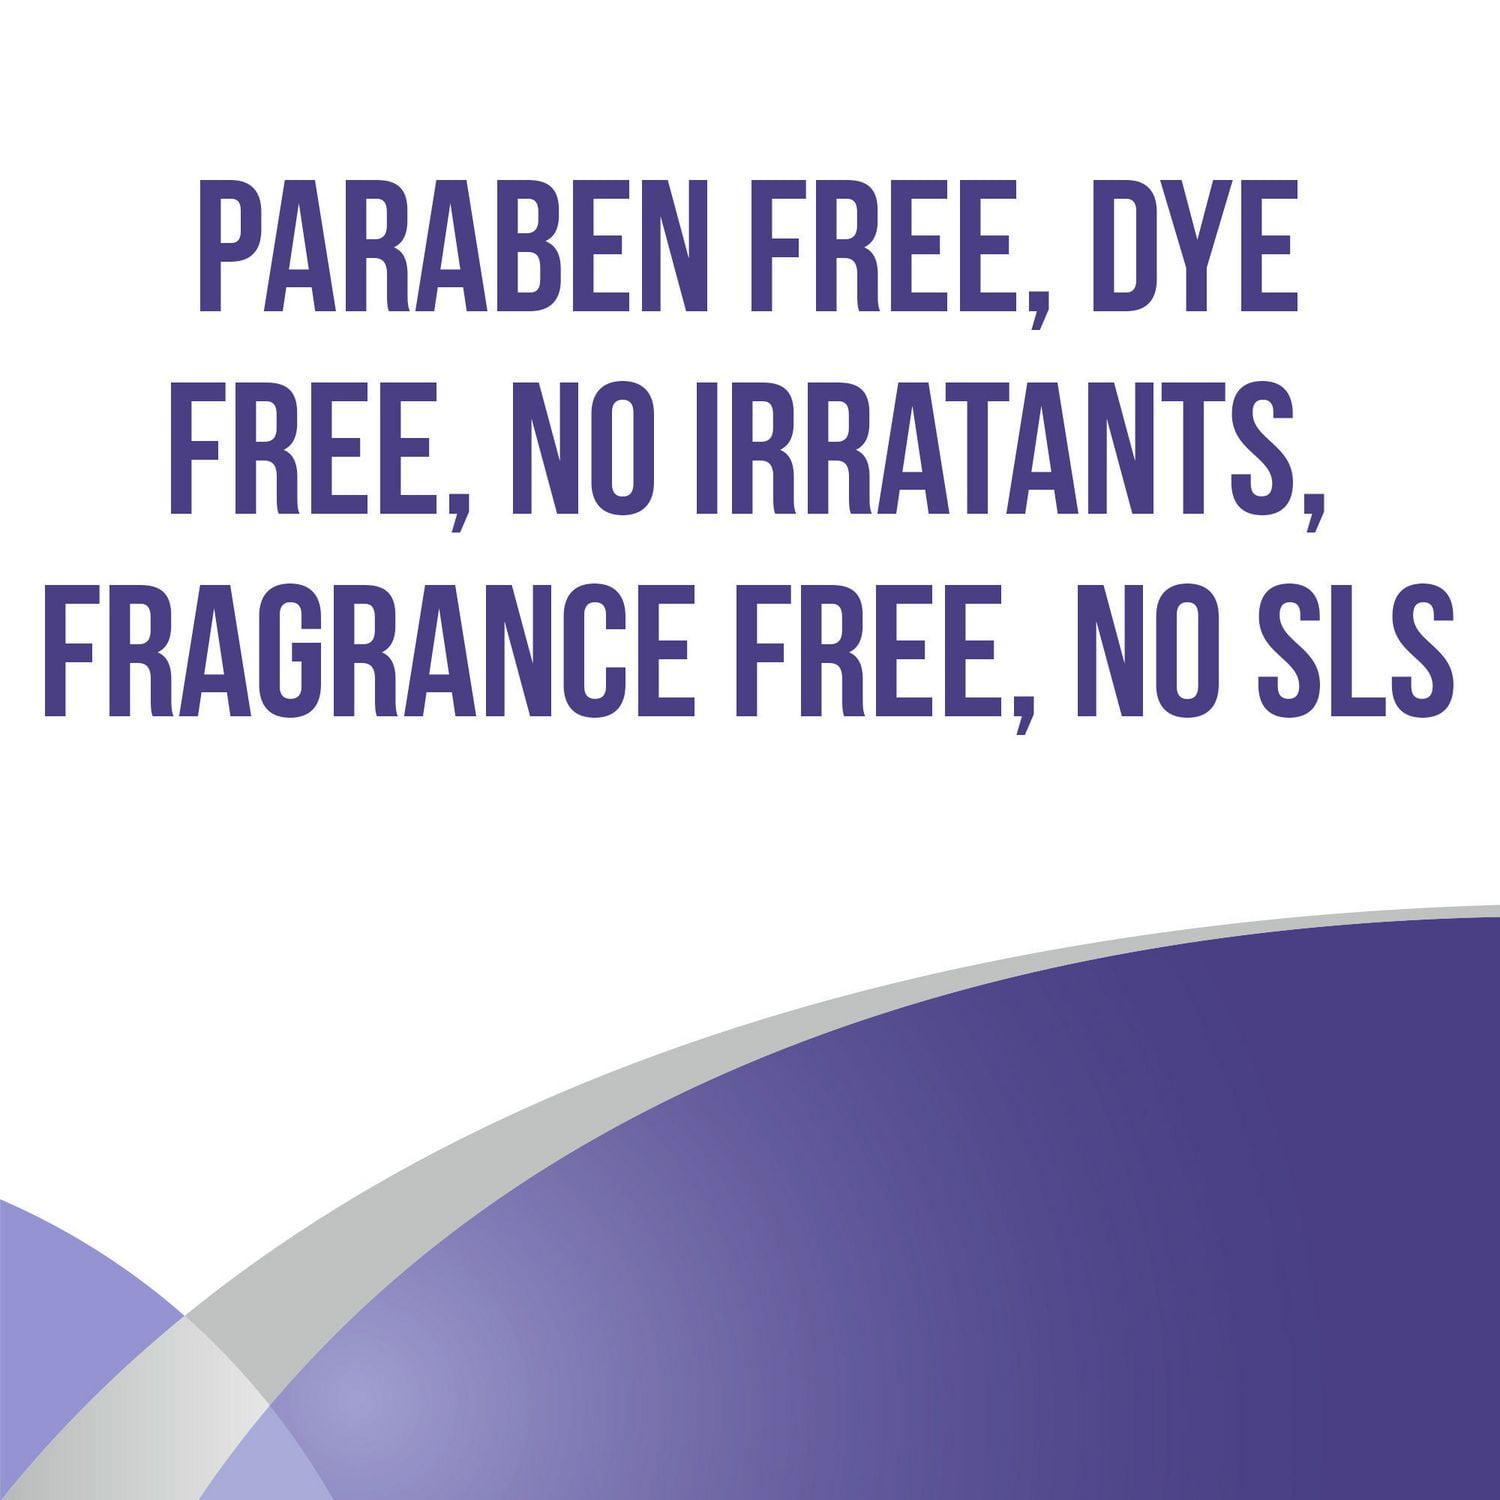 Spectro Jel Cleanser Face Wash Blemish-Prone Skin Fragrance & Dye